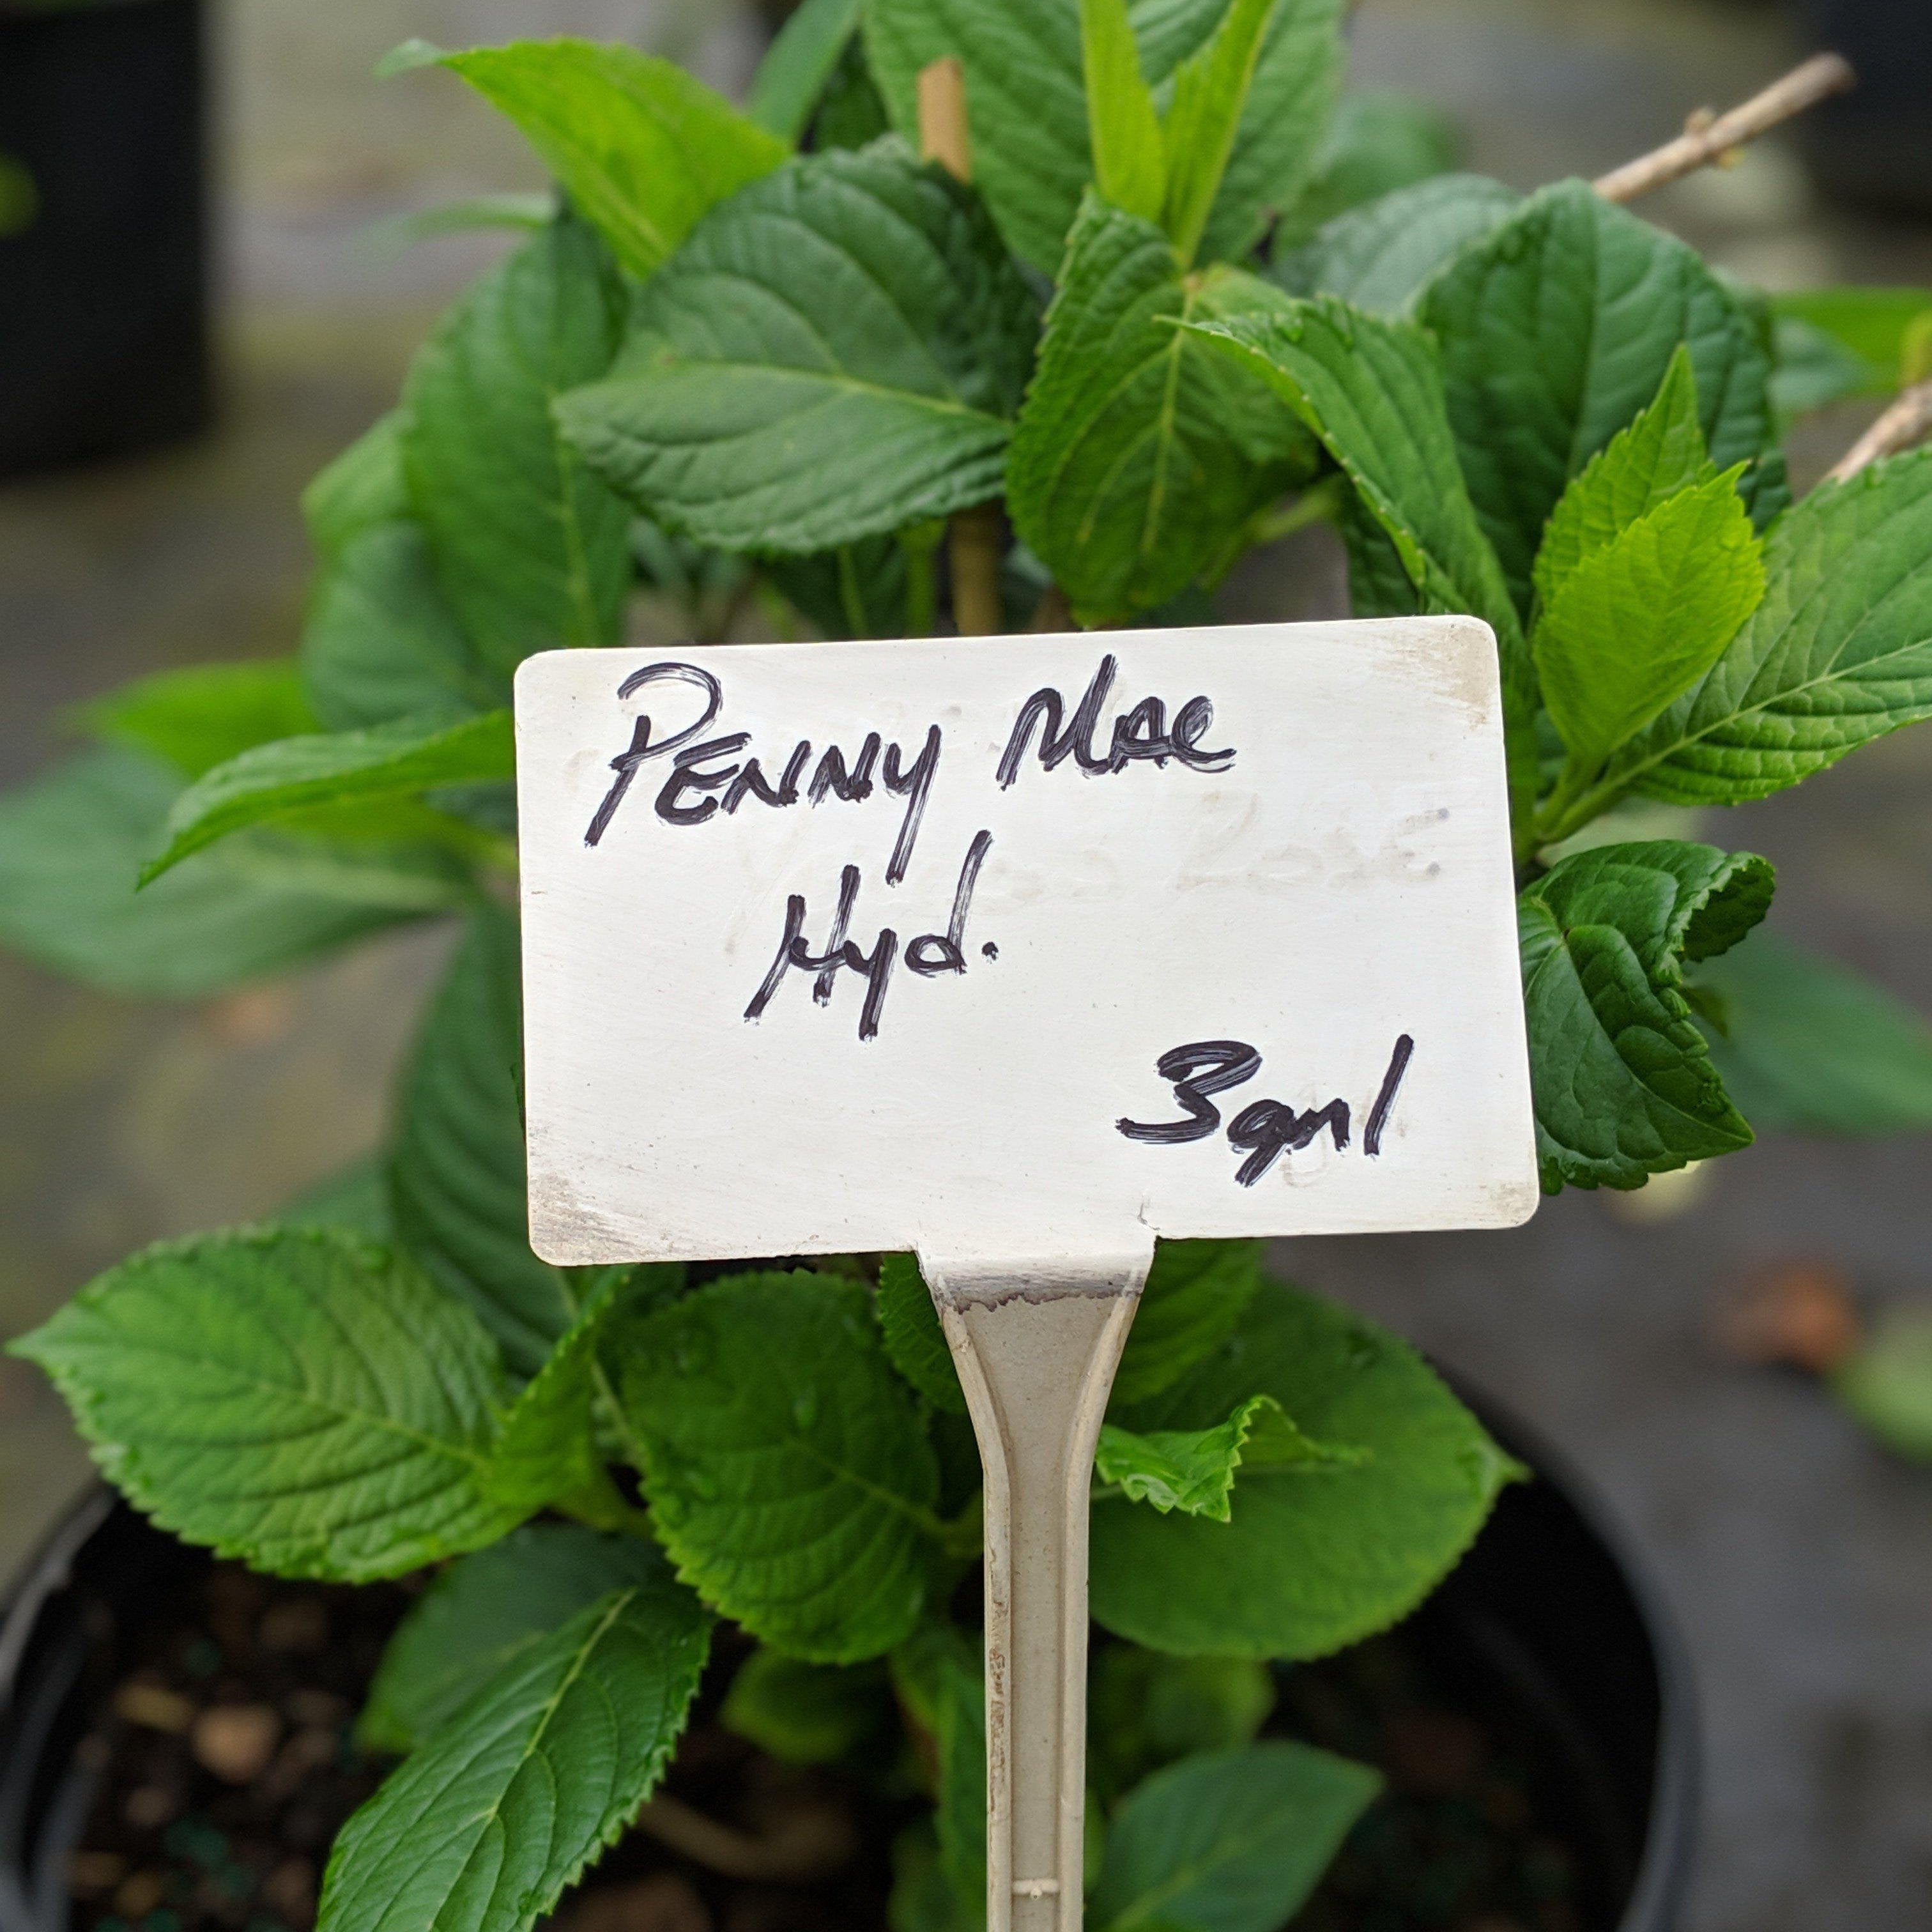 Hydrangea macrophylla 'Penny Mac' ~ Penny Mac Hydrangea